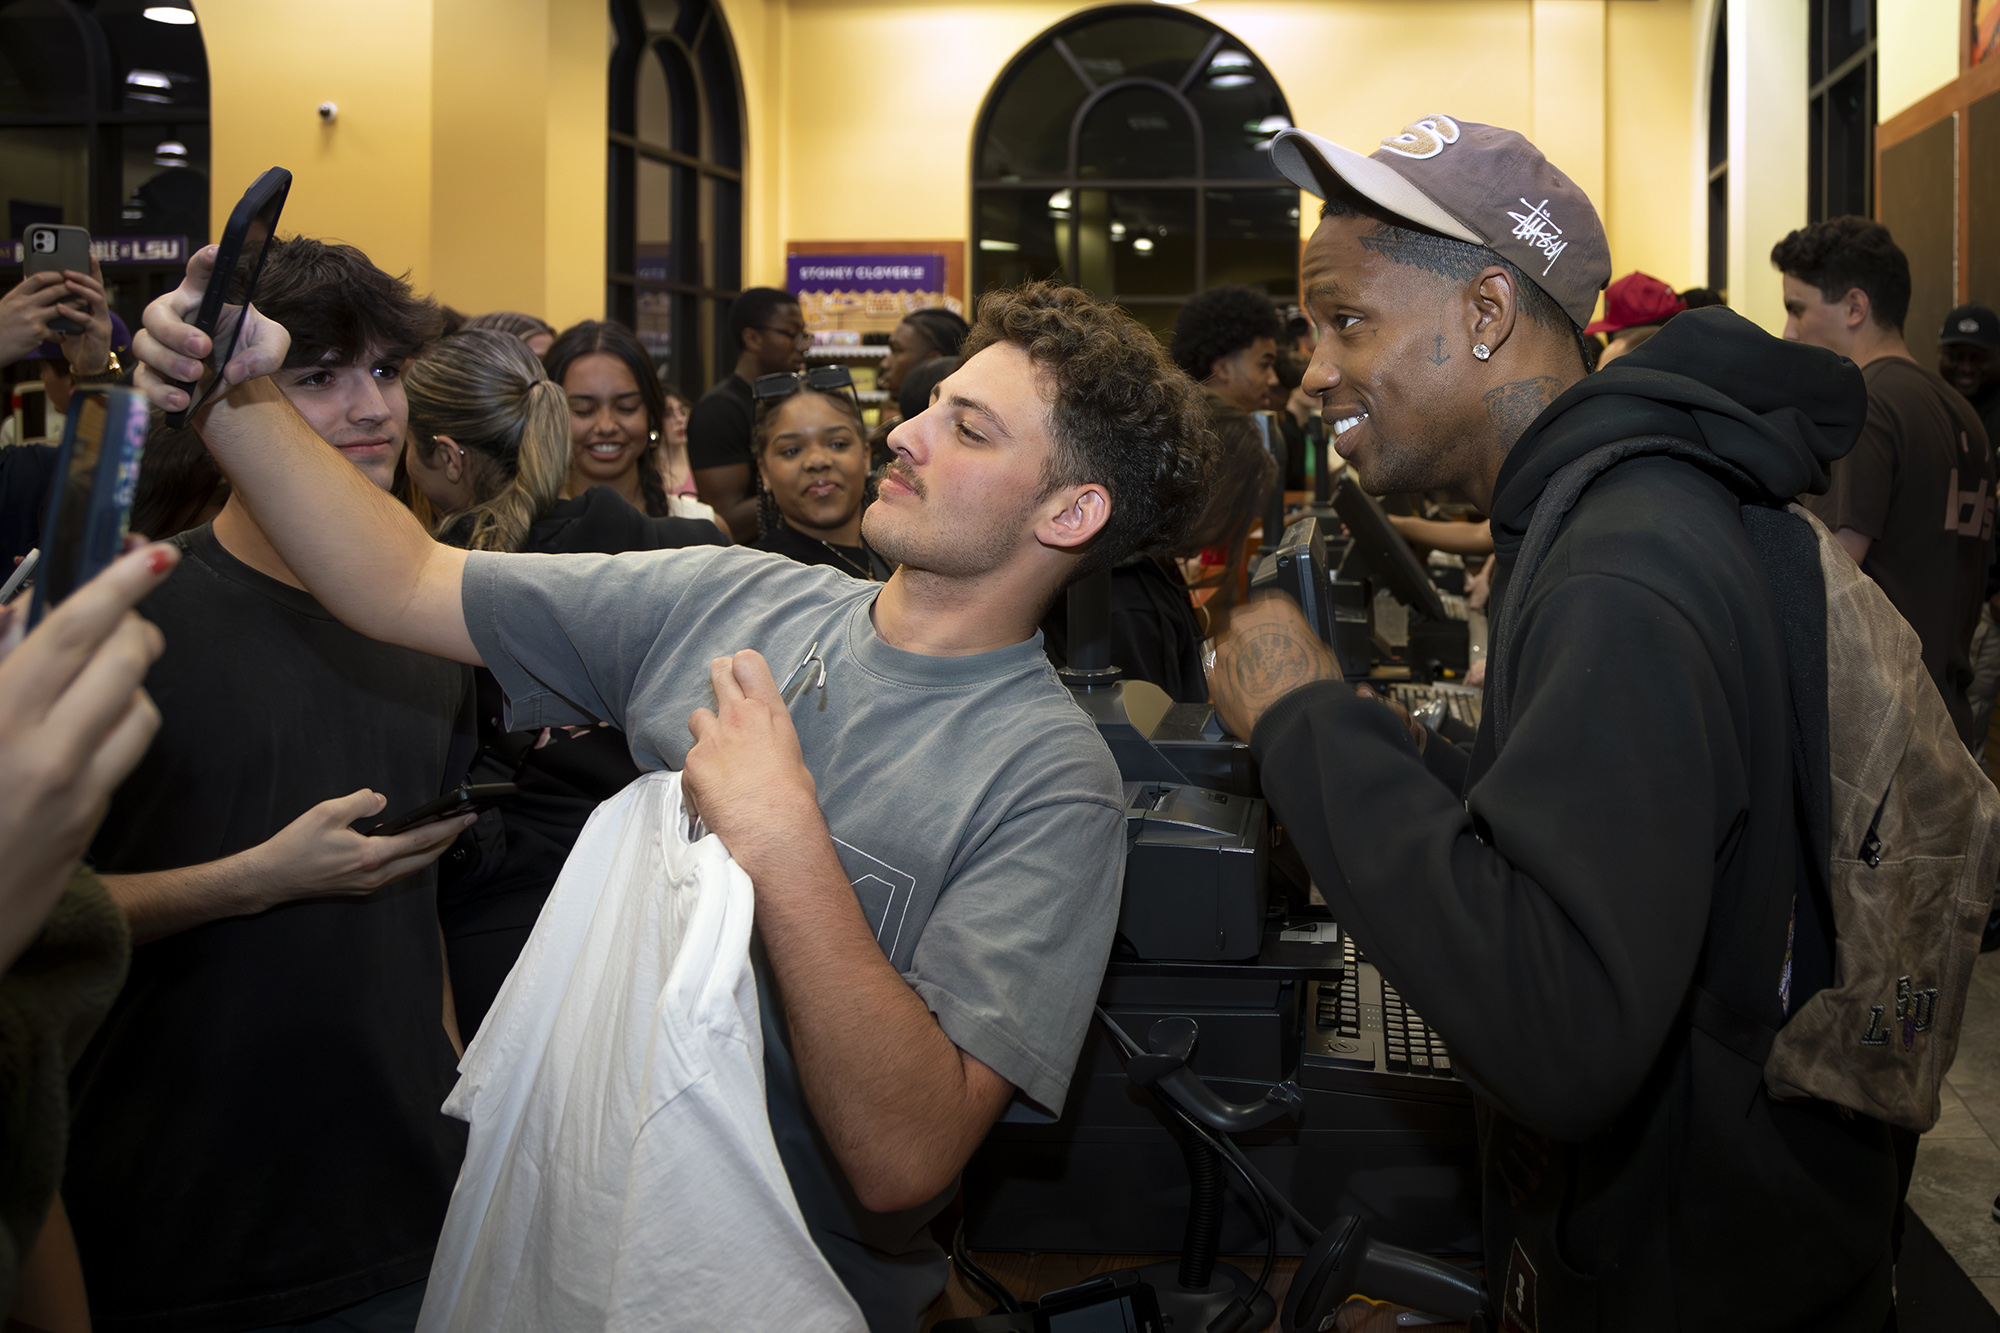 LSU student poses with rapper Travis Scott